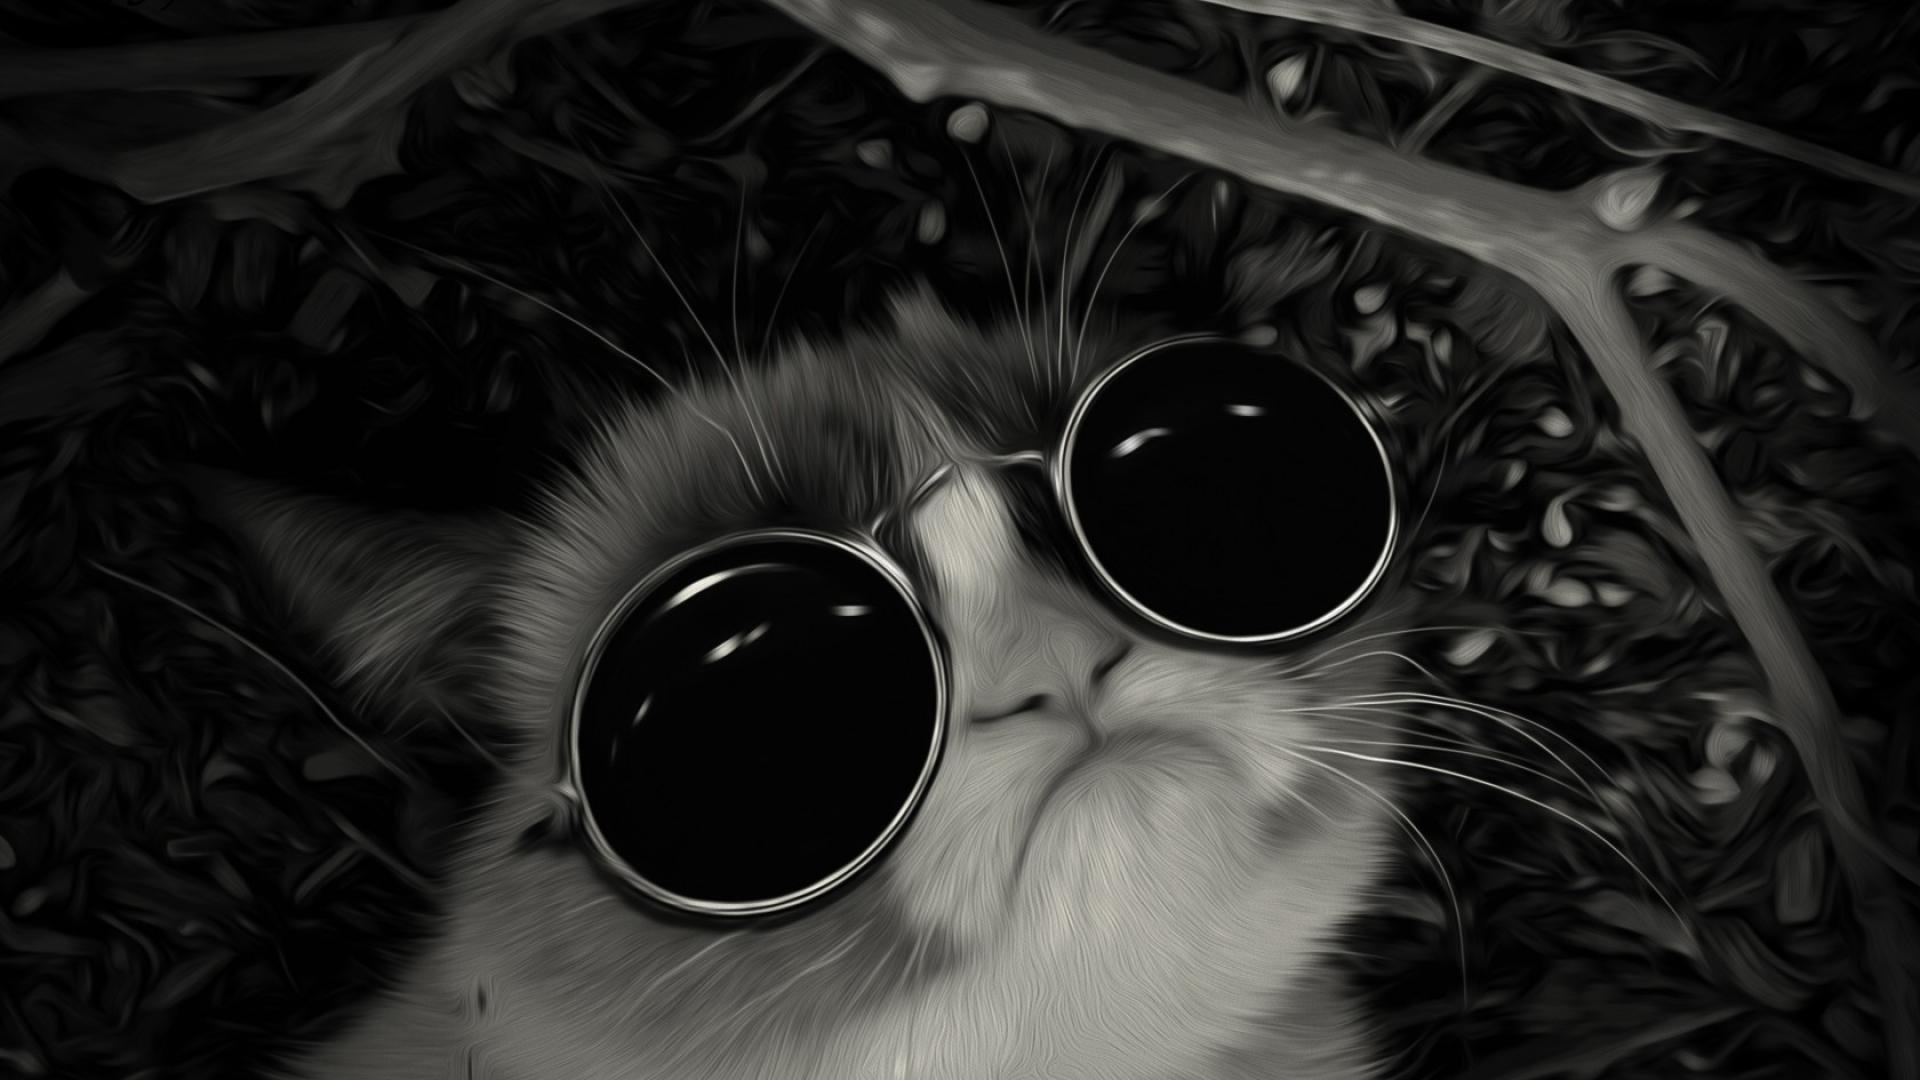 Sunglasses John Lennon Post Awsome Grumpy Cat Wallpaper